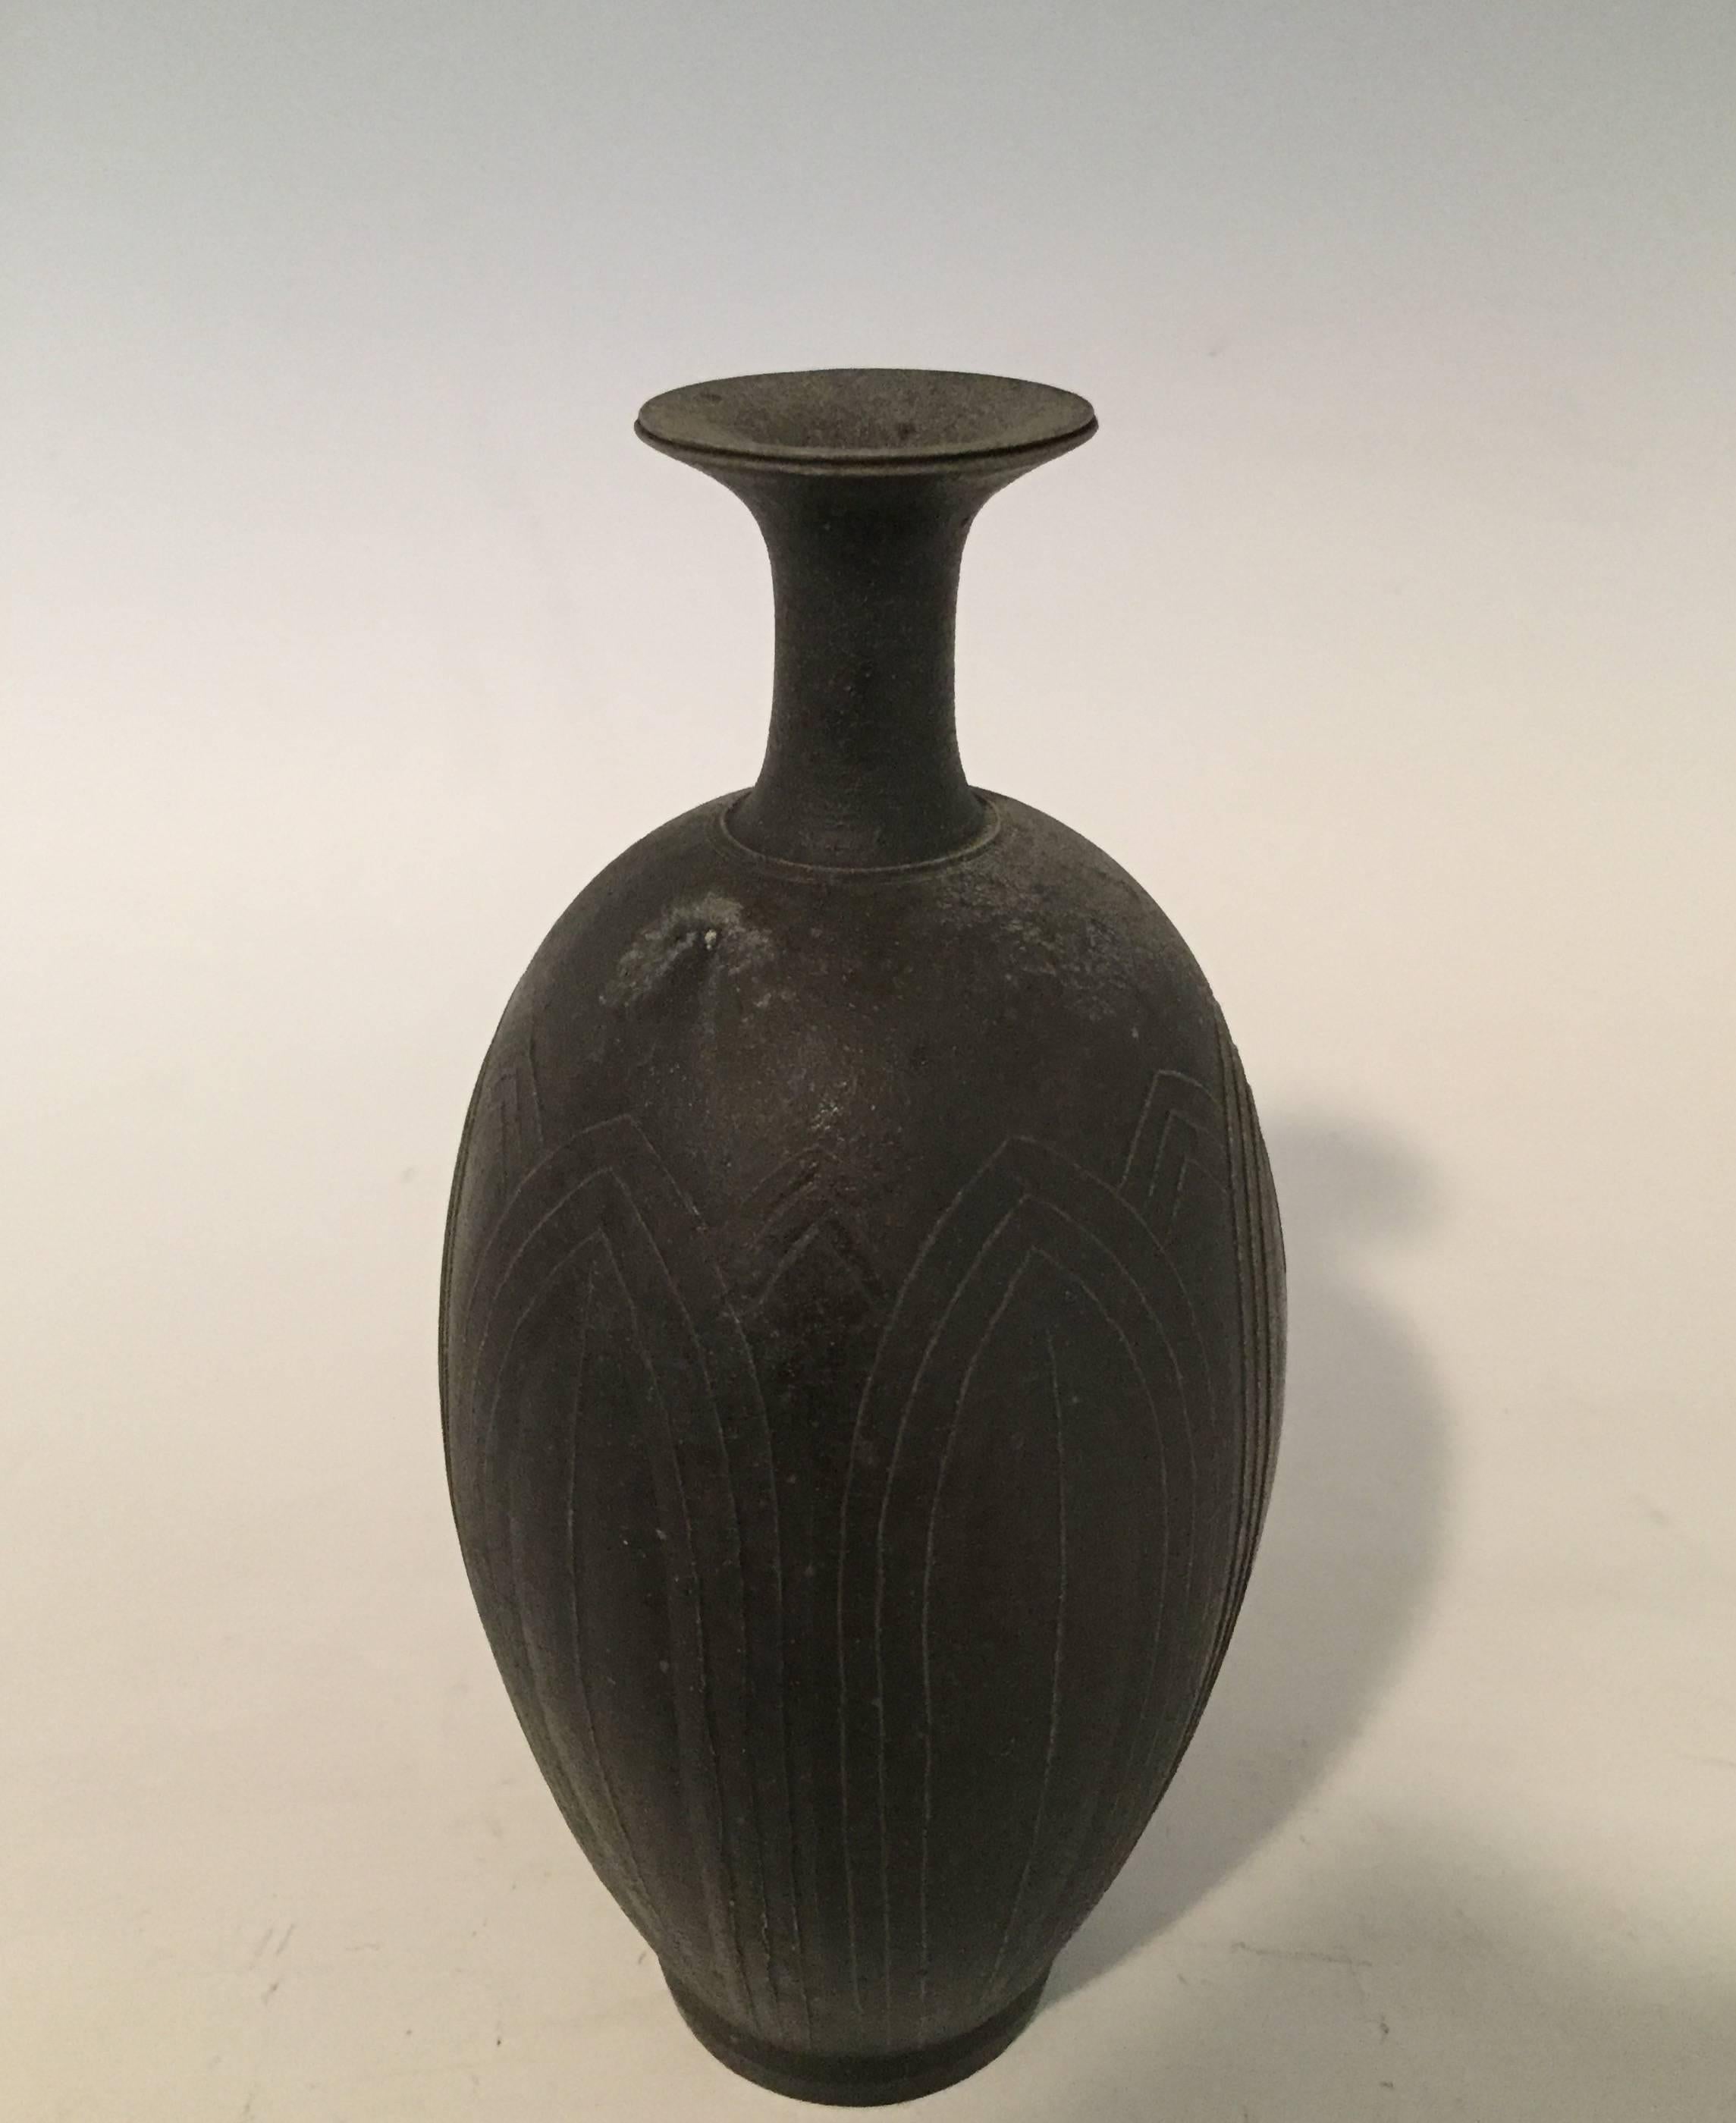 Contemporary Stoneware Vase with Lotus Design by Japanese Ceramicist Koji Toda 1